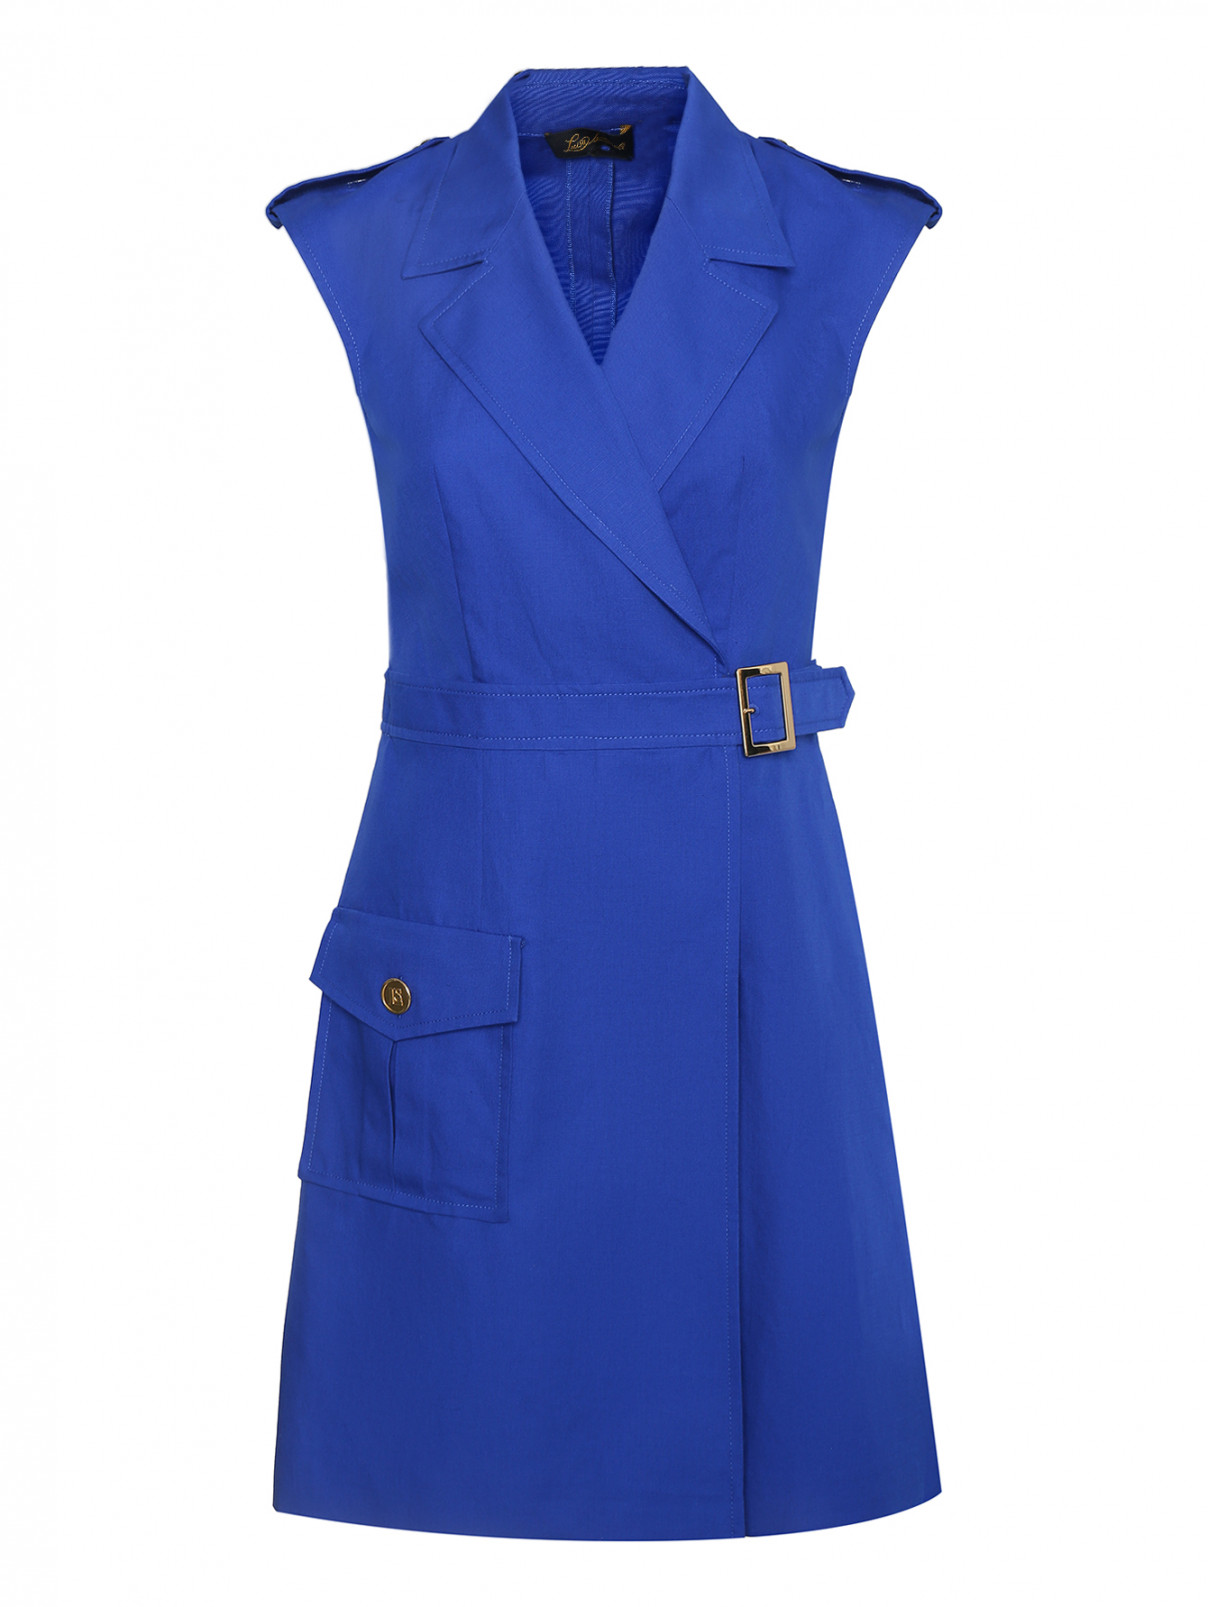 Платье без рукавов на запах Luisa Spagnoli  –  Общий вид  – Цвет:  Синий